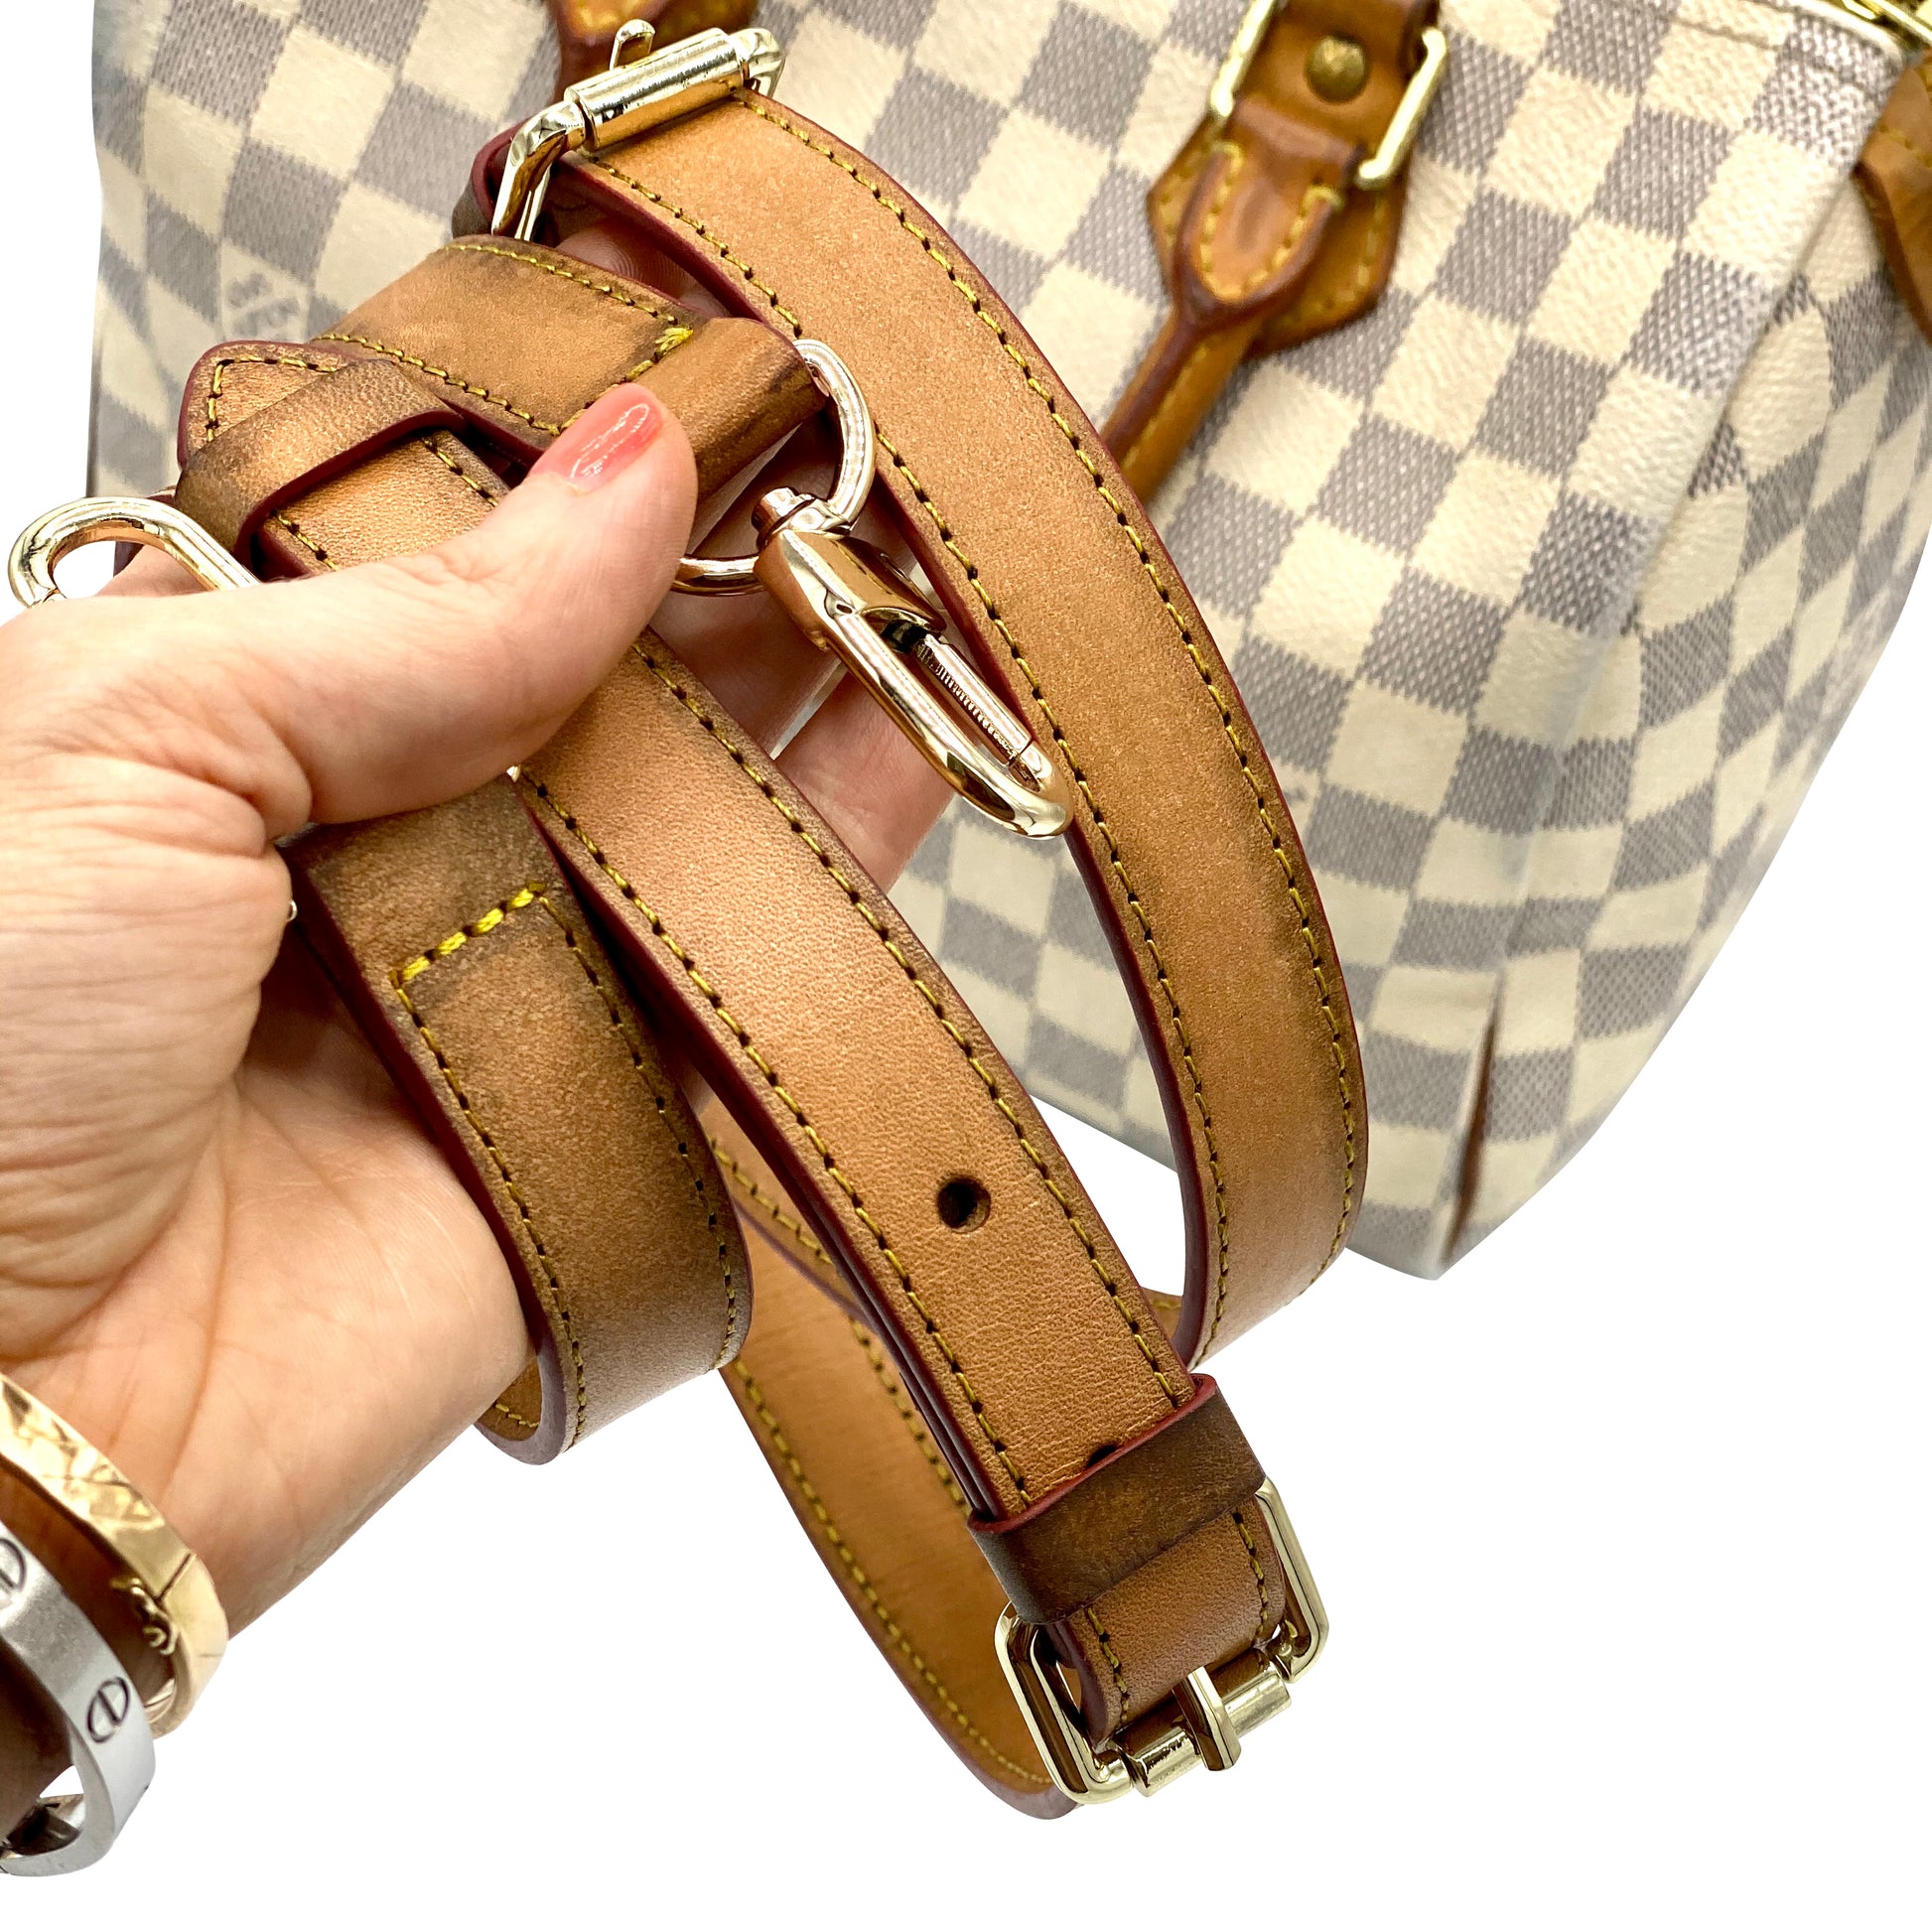 Vachetta Leather Pochette Replacement Strap for Sale – Sexy Little Vintage